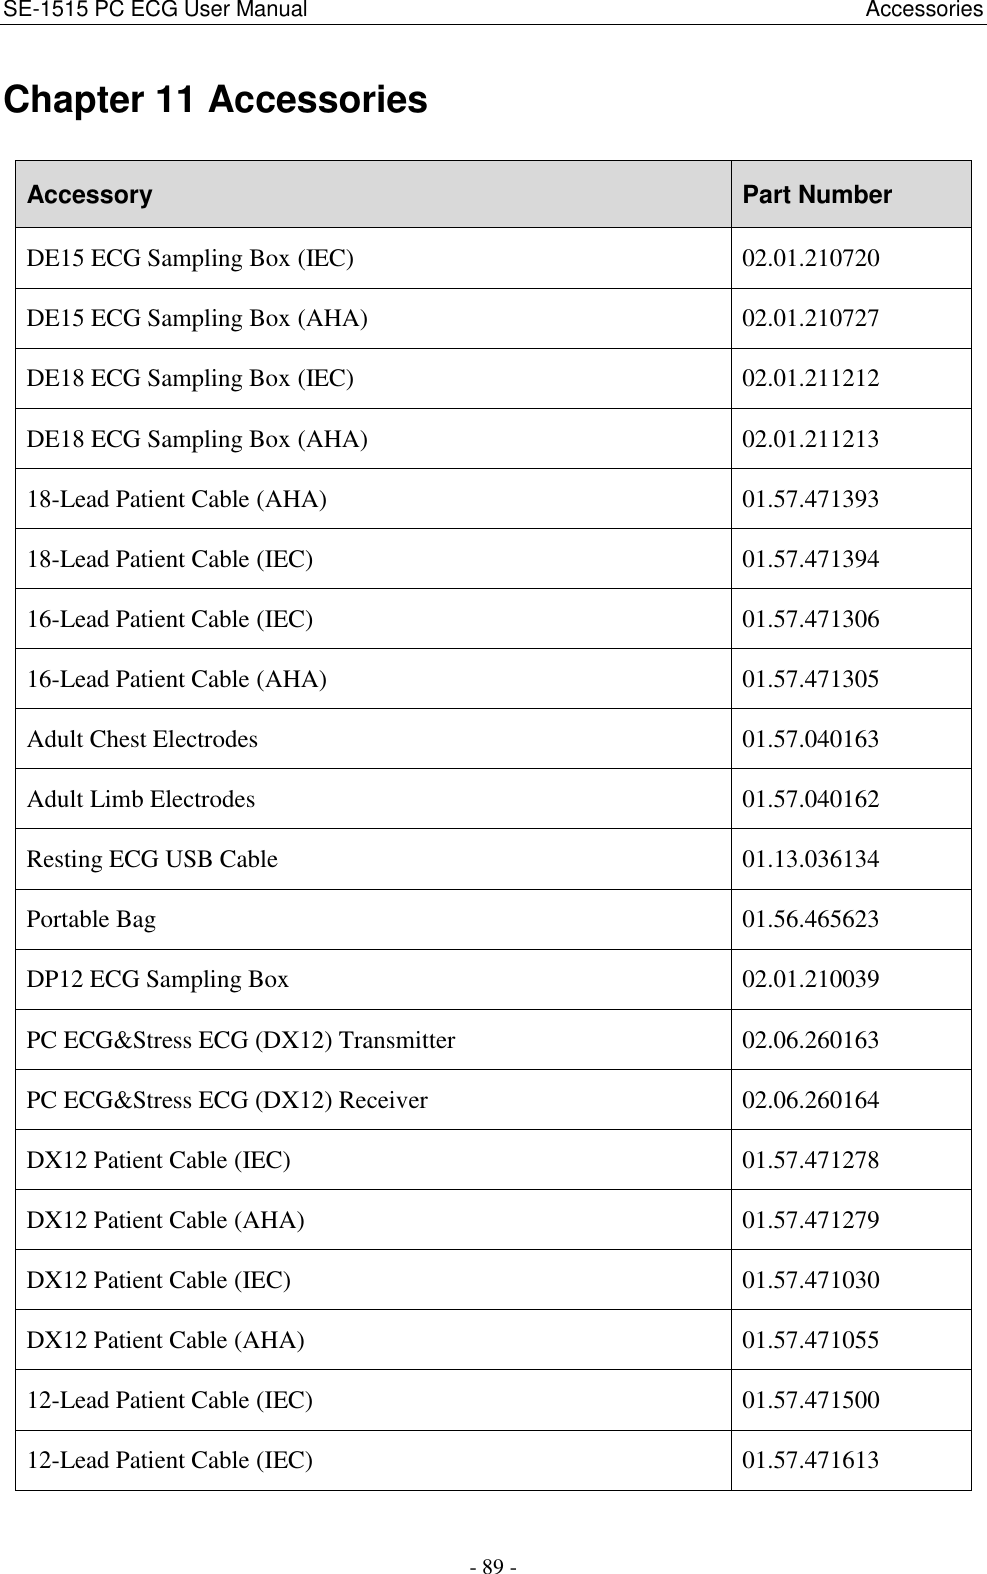 SE-1515 PC ECG User Manual                                                                                                      Accessories - 89 - Chapter 11 Accessories Accessory Part Number DE15 ECG Sampling Box (IEC) 02.01.210720 DE15 ECG Sampling Box (AHA) 02.01.210727 DE18 ECG Sampling Box (IEC) 02.01.211212 DE18 ECG Sampling Box (AHA) 02.01.211213 18-Lead Patient Cable (AHA) 01.57.471393 18-Lead Patient Cable (IEC) 01.57.471394 16-Lead Patient Cable (IEC) 01.57.471306 16-Lead Patient Cable (AHA) 01.57.471305 Adult Chest Electrodes 01.57.040163 Adult Limb Electrodes 01.57.040162 Resting ECG USB Cable 01.13.036134 Portable Bag 01.56.465623 DP12 ECG Sampling Box 02.01.210039 PC ECG&amp;Stress ECG (DX12) Transmitter 02.06.260163   PC ECG&amp;Stress ECG (DX12) Receiver 02.06.260164   DX12 Patient Cable (IEC) 01.57.471278 DX12 Patient Cable (AHA) 01.57.471279 DX12 Patient Cable (IEC) 01.57.471030 DX12 Patient Cable (AHA) 01.57.471055 12-Lead Patient Cable (IEC) 01.57.471500 12-Lead Patient Cable (IEC) 01.57.471613 